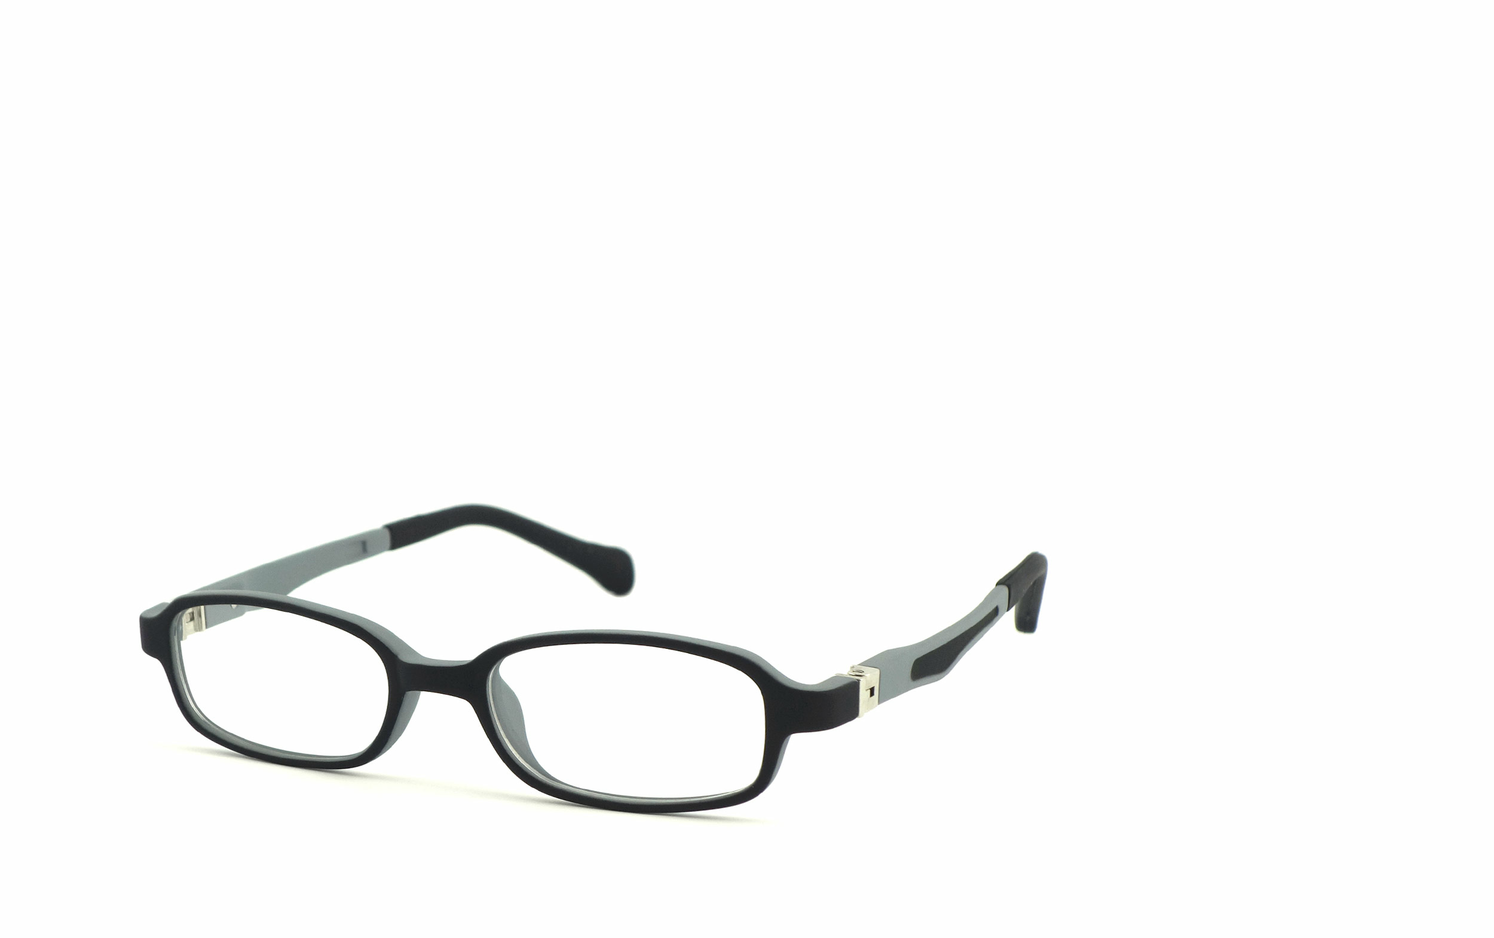 FRICKO kids & teens eyewear | Kinderbrille 002 grau  Kinderbrille, Brille, Brillengestell, Brillenfassung, Korrekturbrille, Korrekturfassung